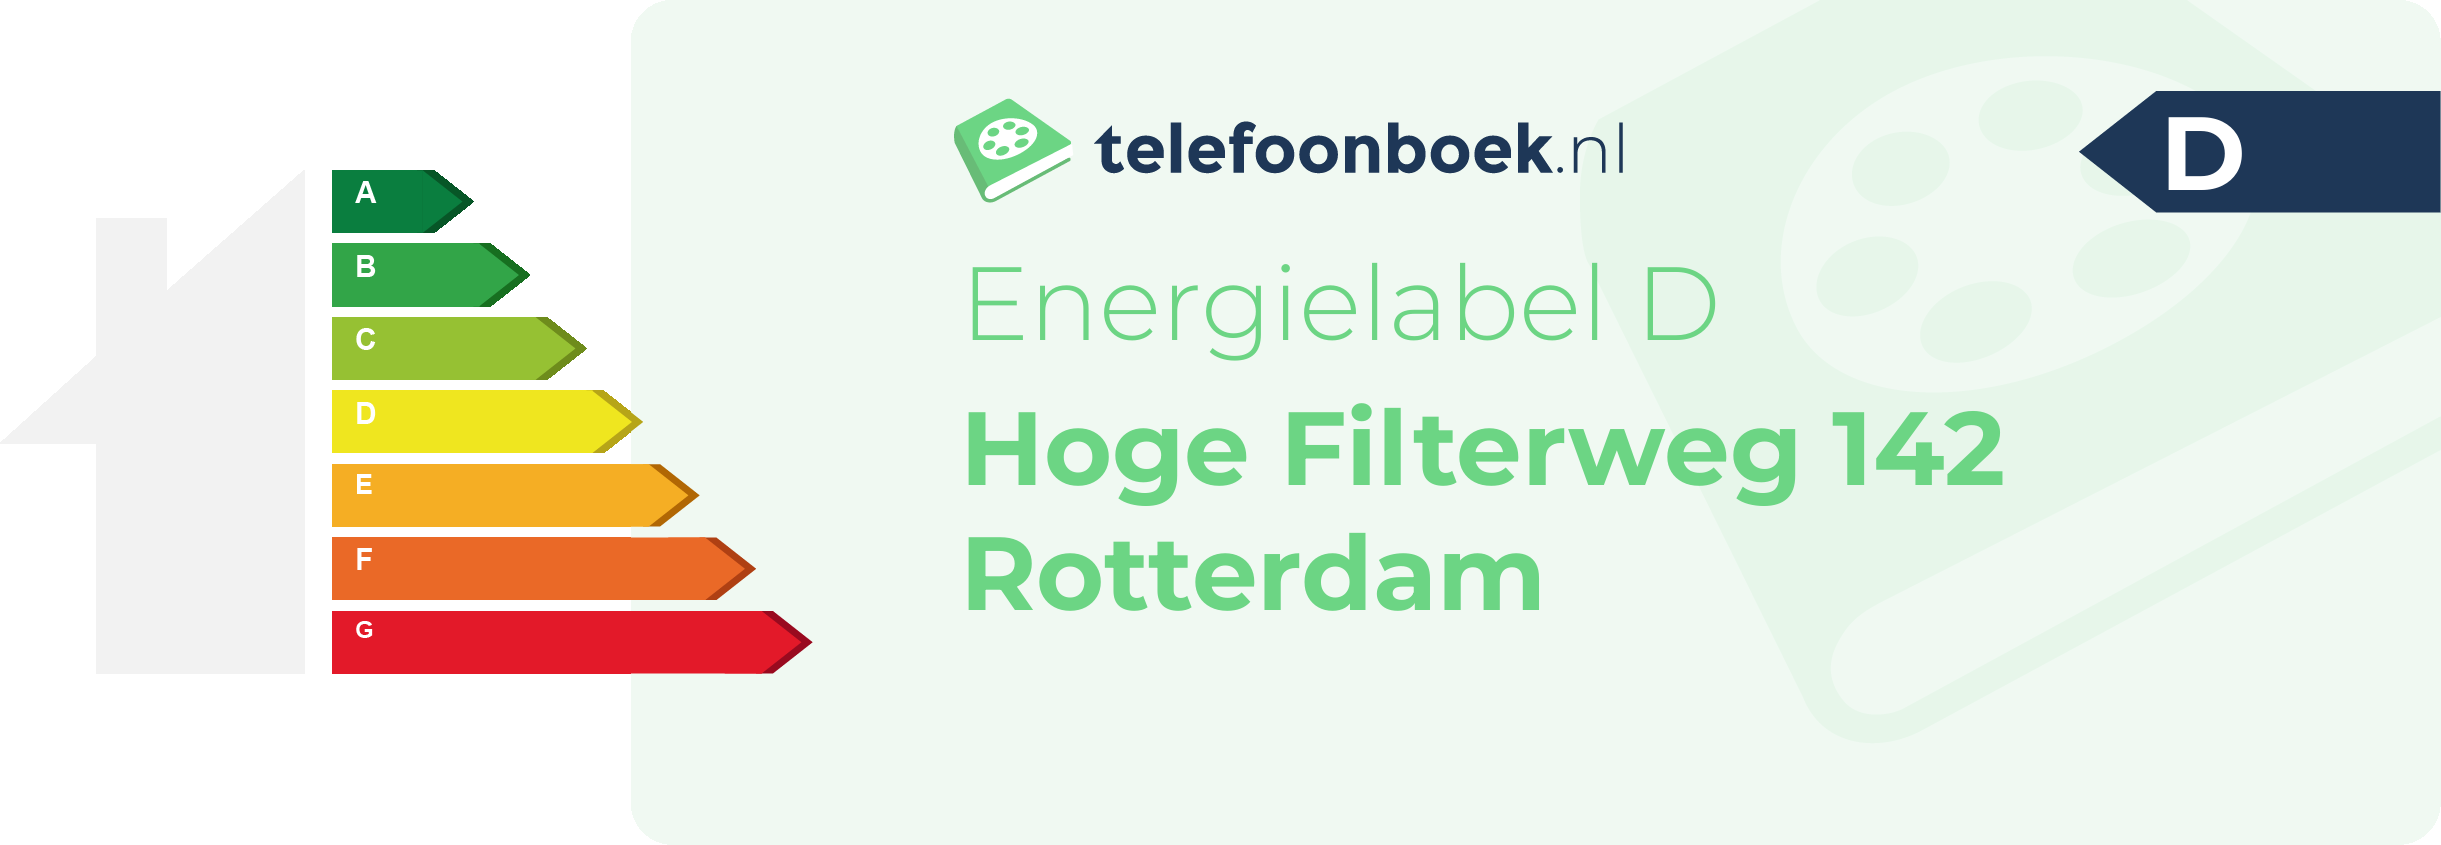 Energielabel Hoge Filterweg 142 Rotterdam